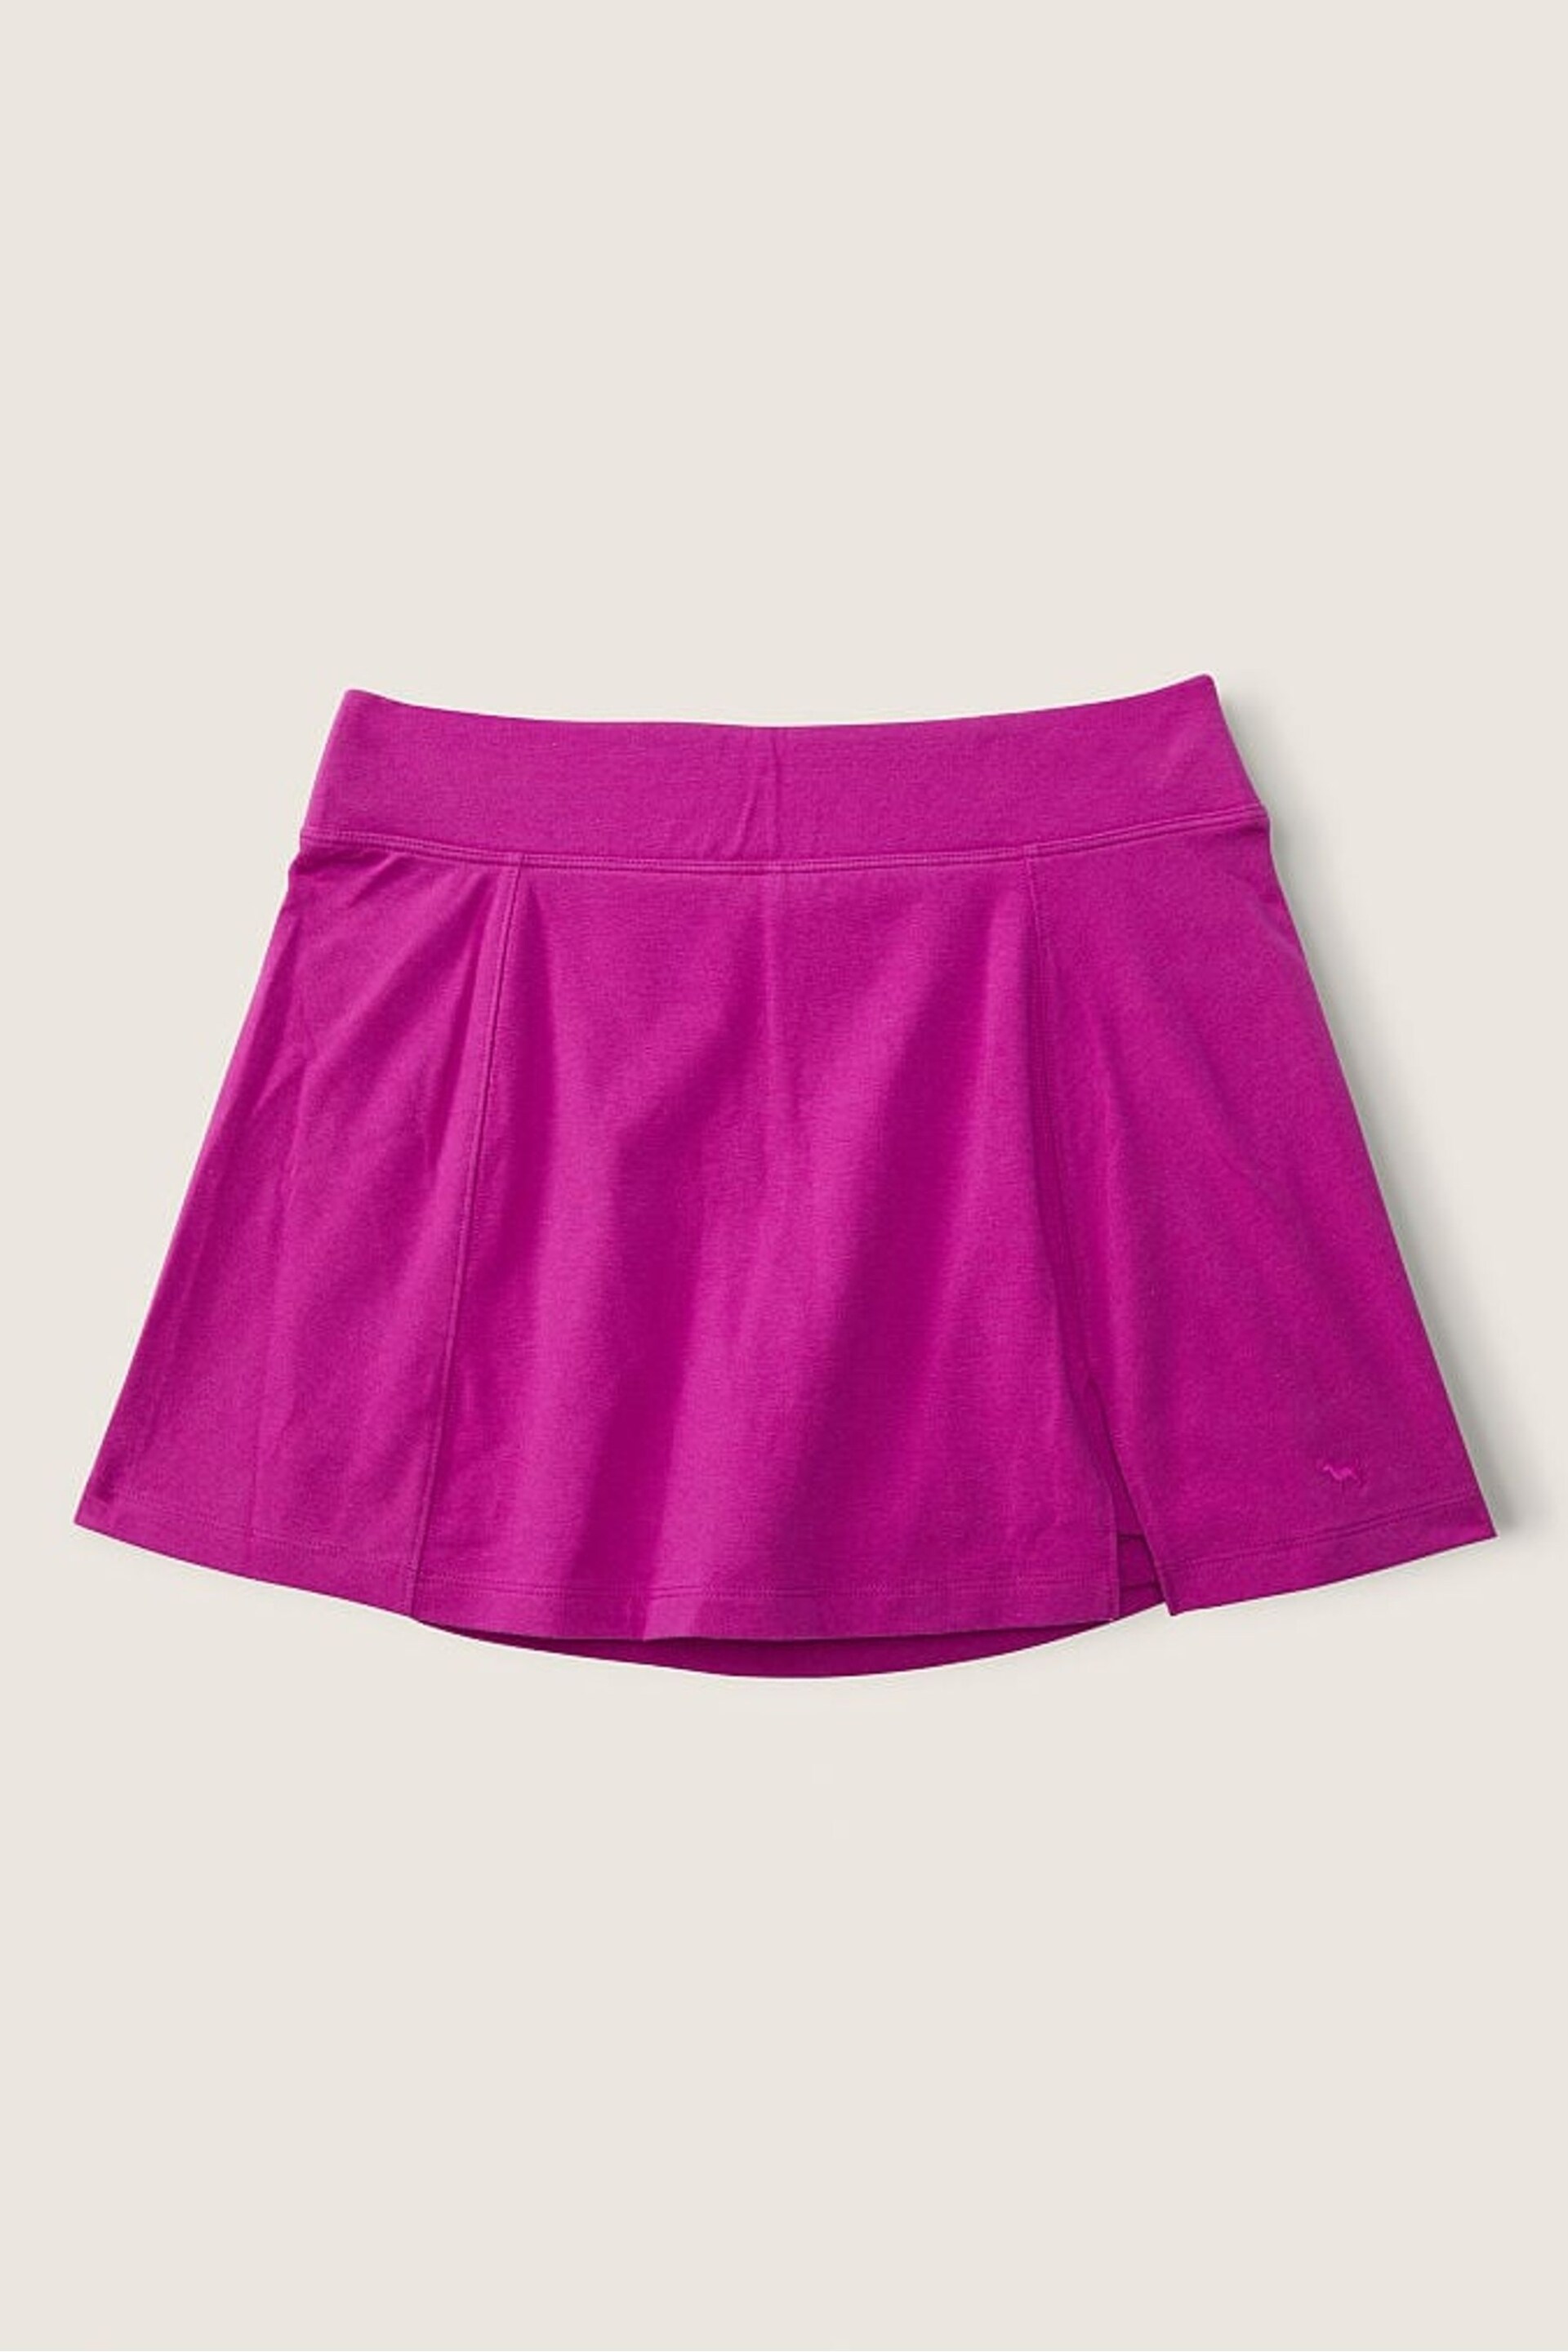 Victoria's Secret PINK Dahlia Magenta Pink Cotton Active Skirts - Image 4 of 4